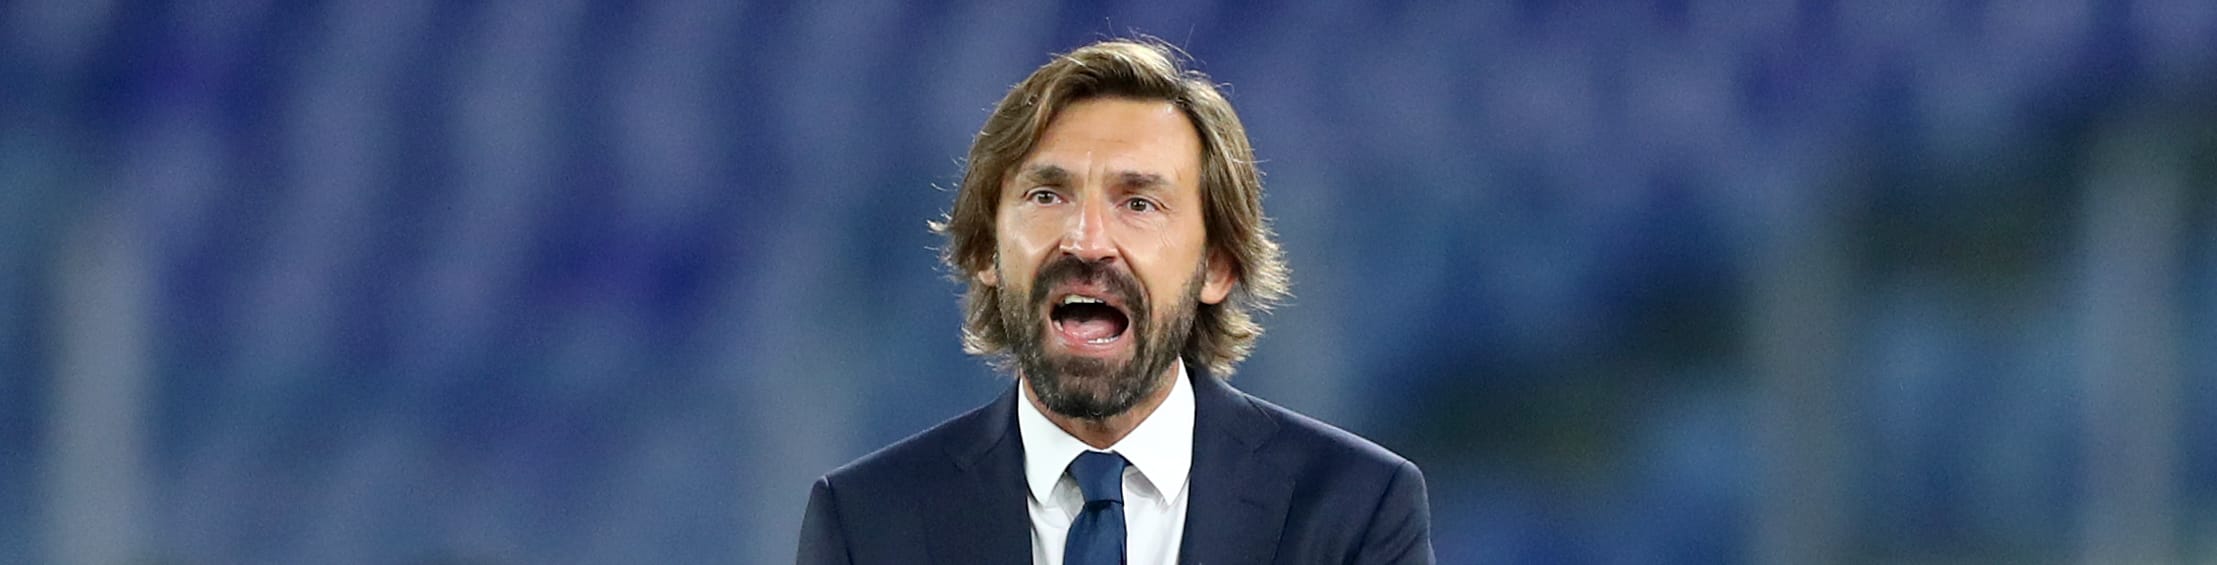 Pronostico Dinamo Kiev-Juventus: Dybala in panca, Ramsey trequartista – le ultimissime